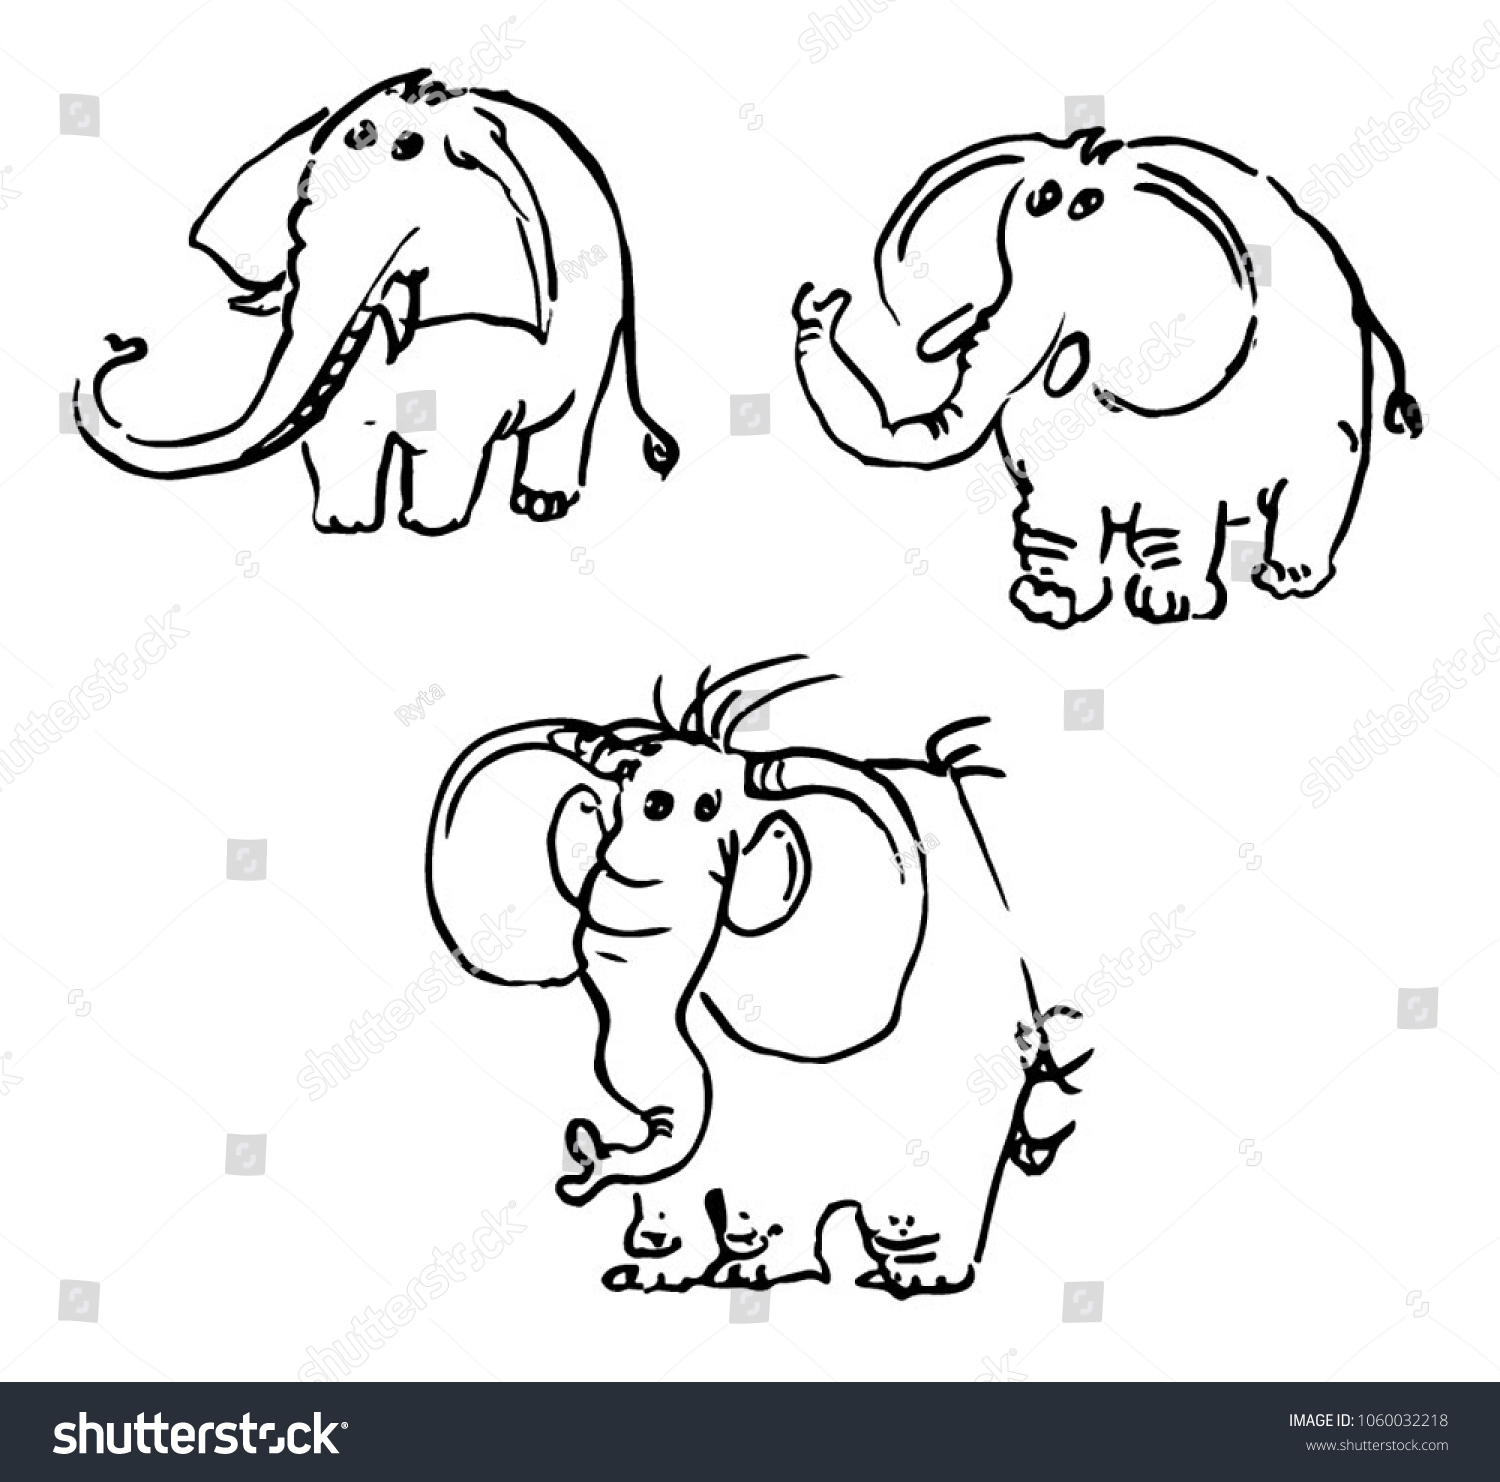 SVG of sketch cartoon three little elephants svg